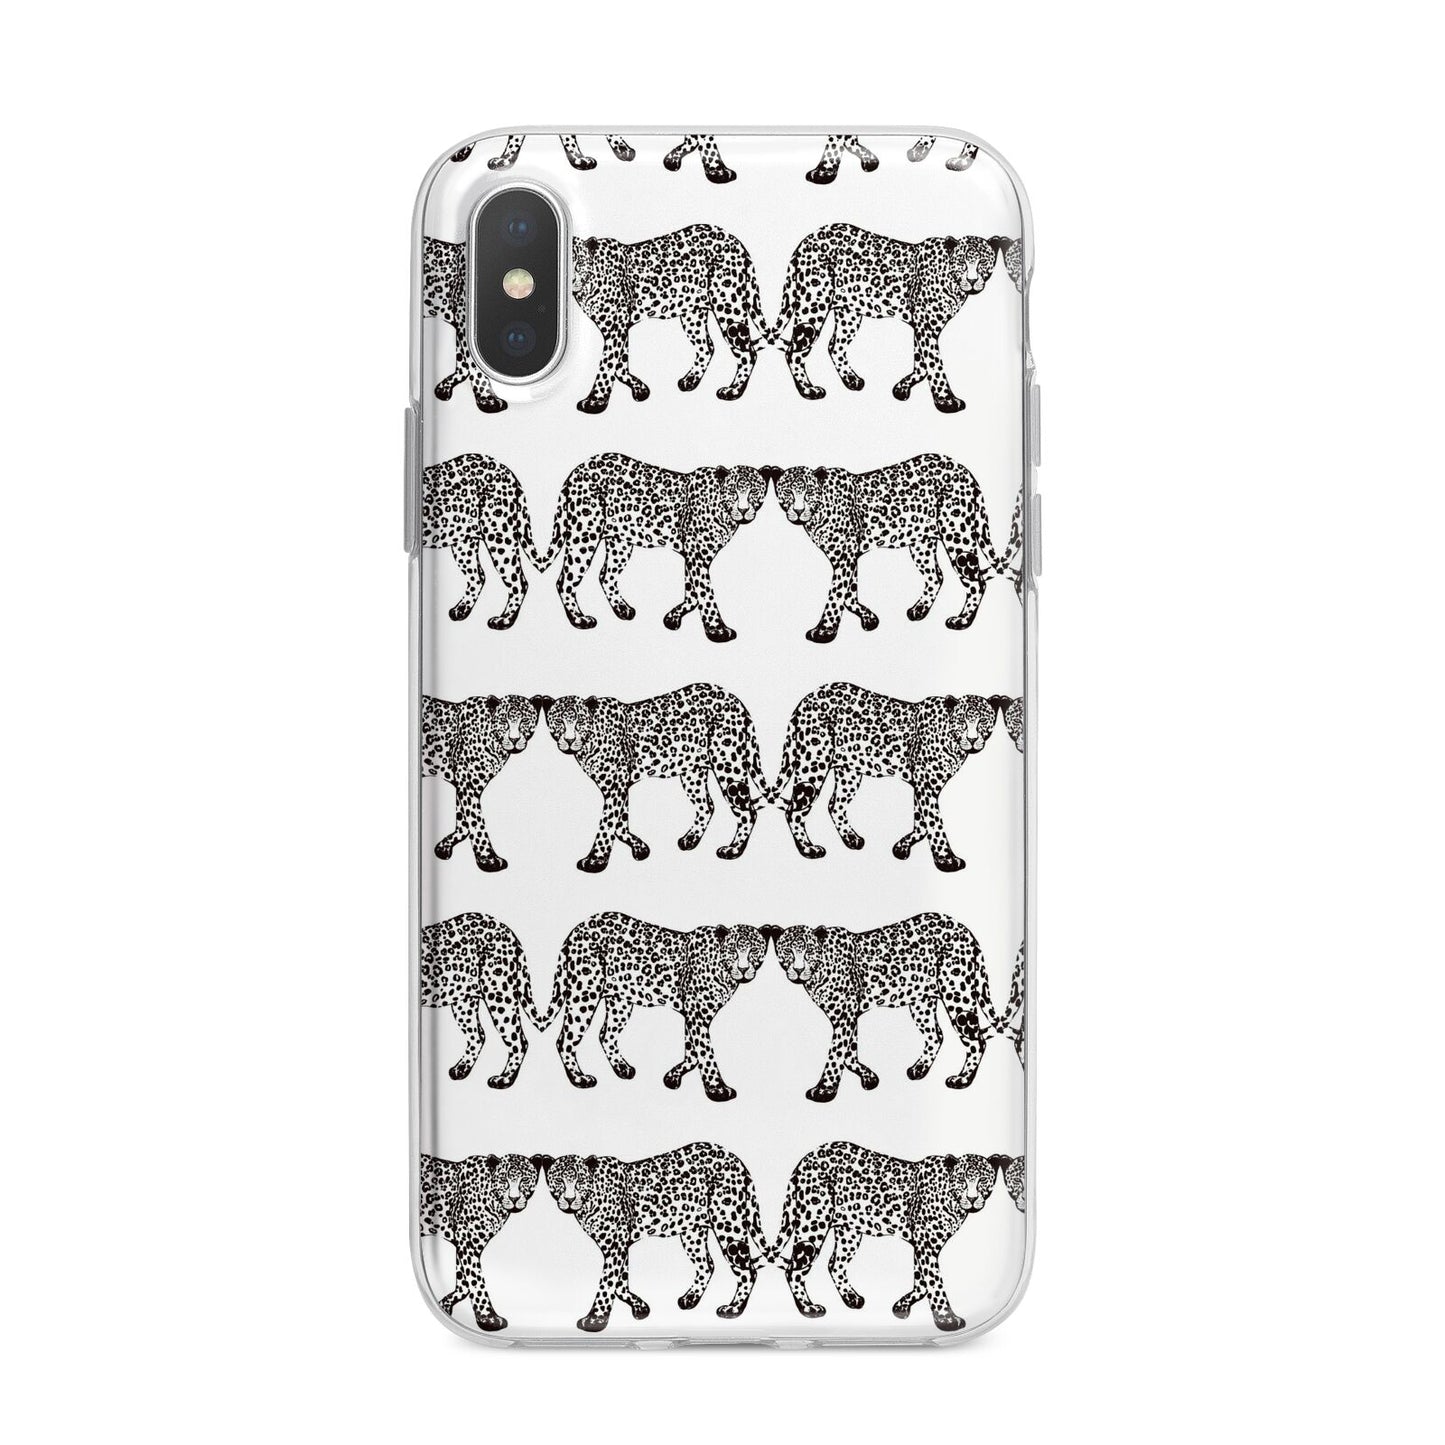 Monochrome Mirrored Leopard Print iPhone X Bumper Case on Silver iPhone Alternative Image 1